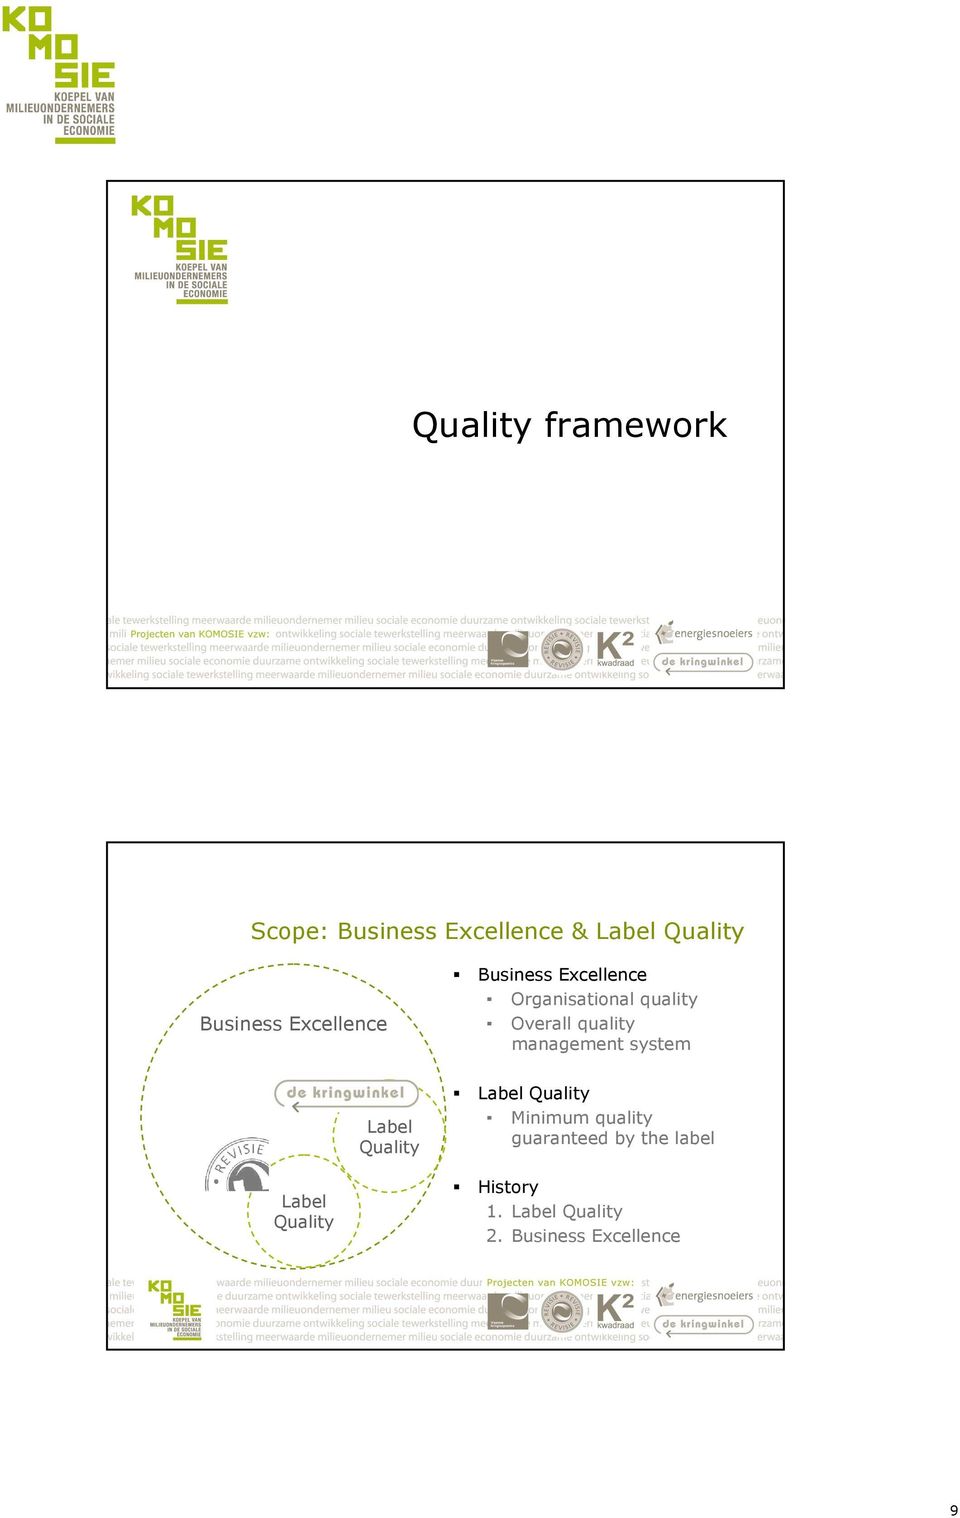 management system Label Quality Label Quality Label Quality Minimum